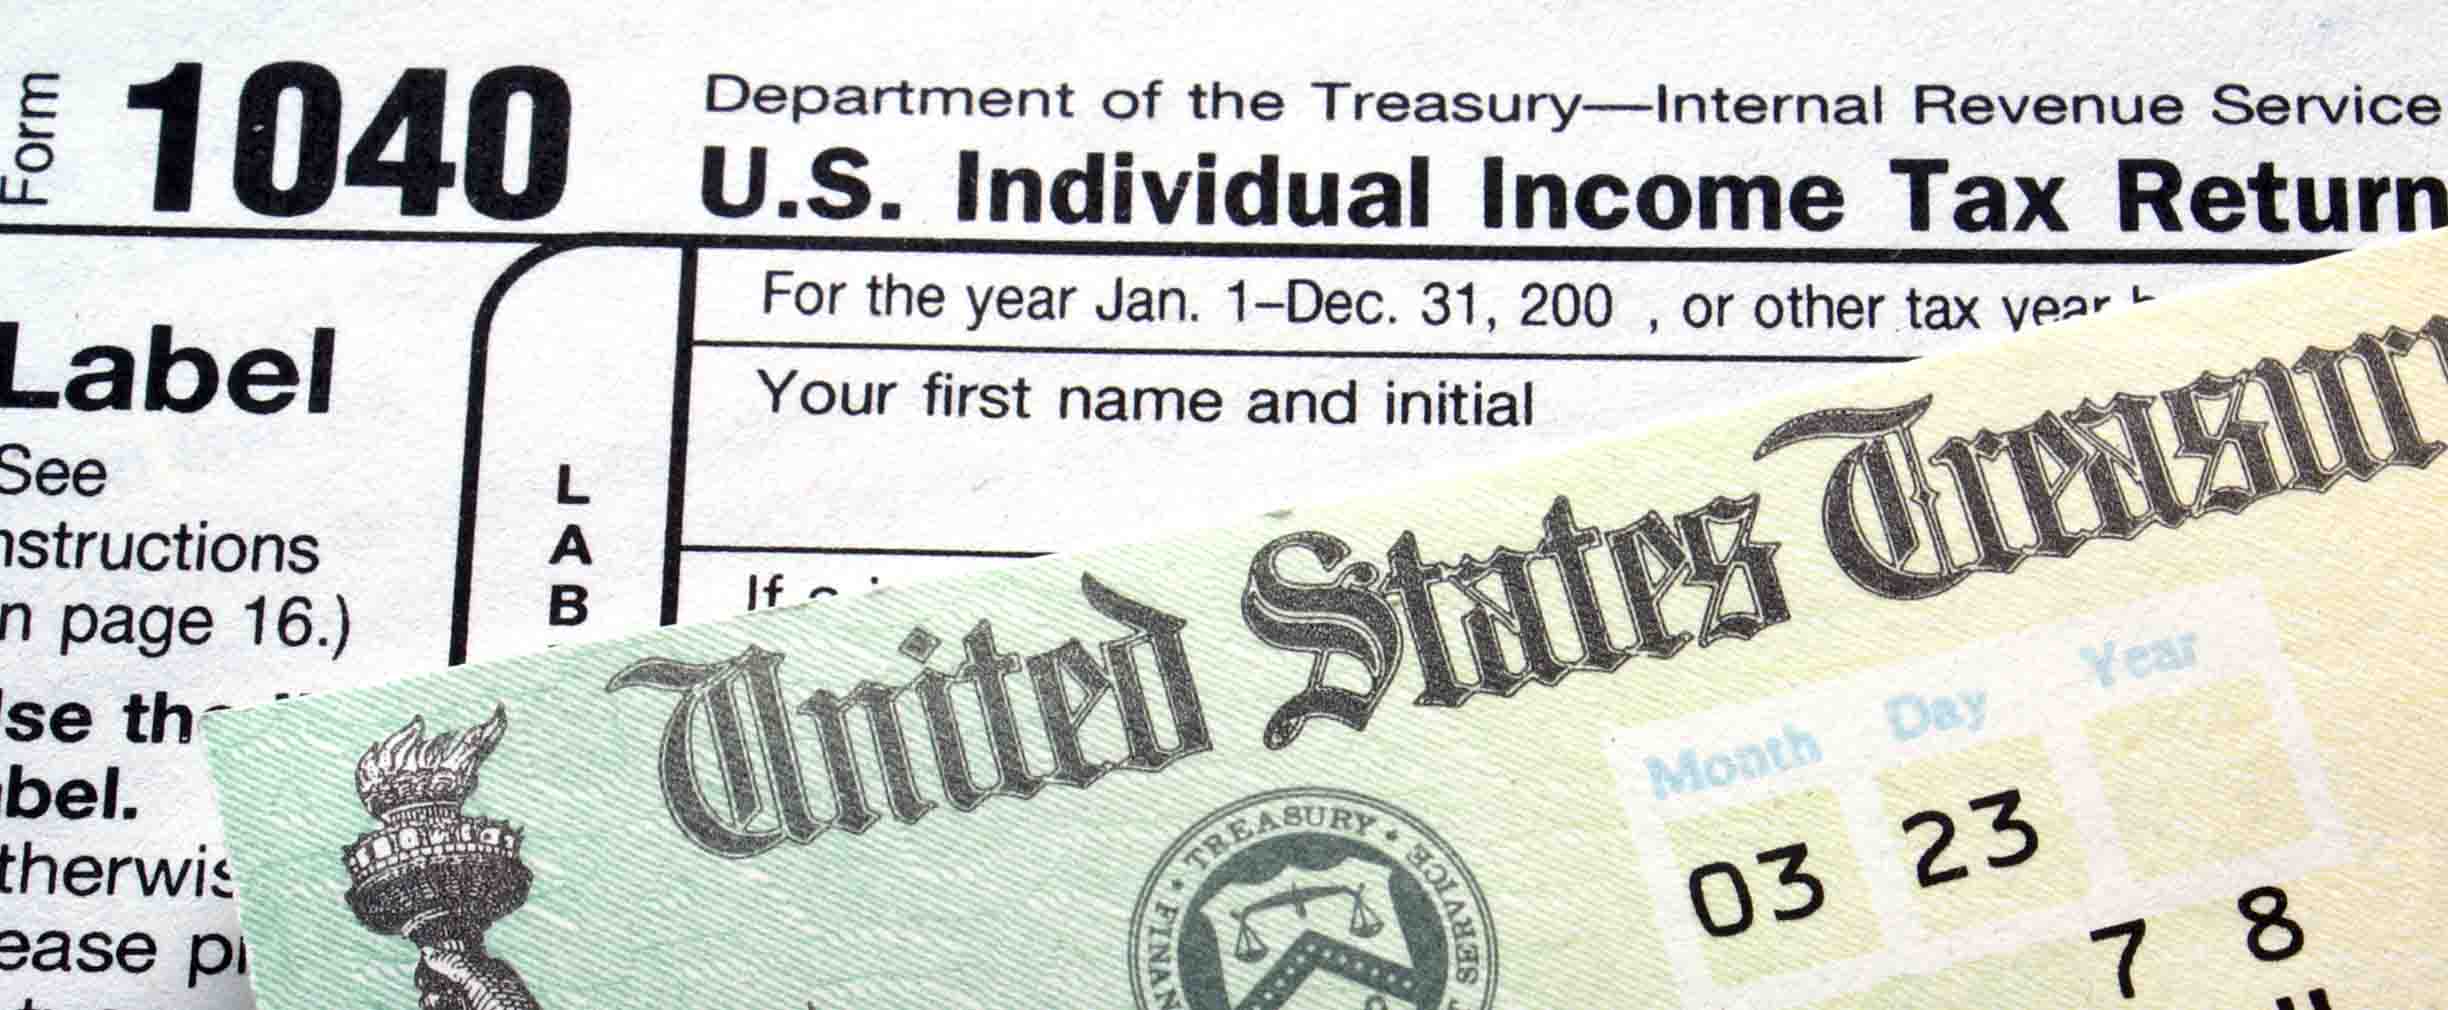 federal tax return